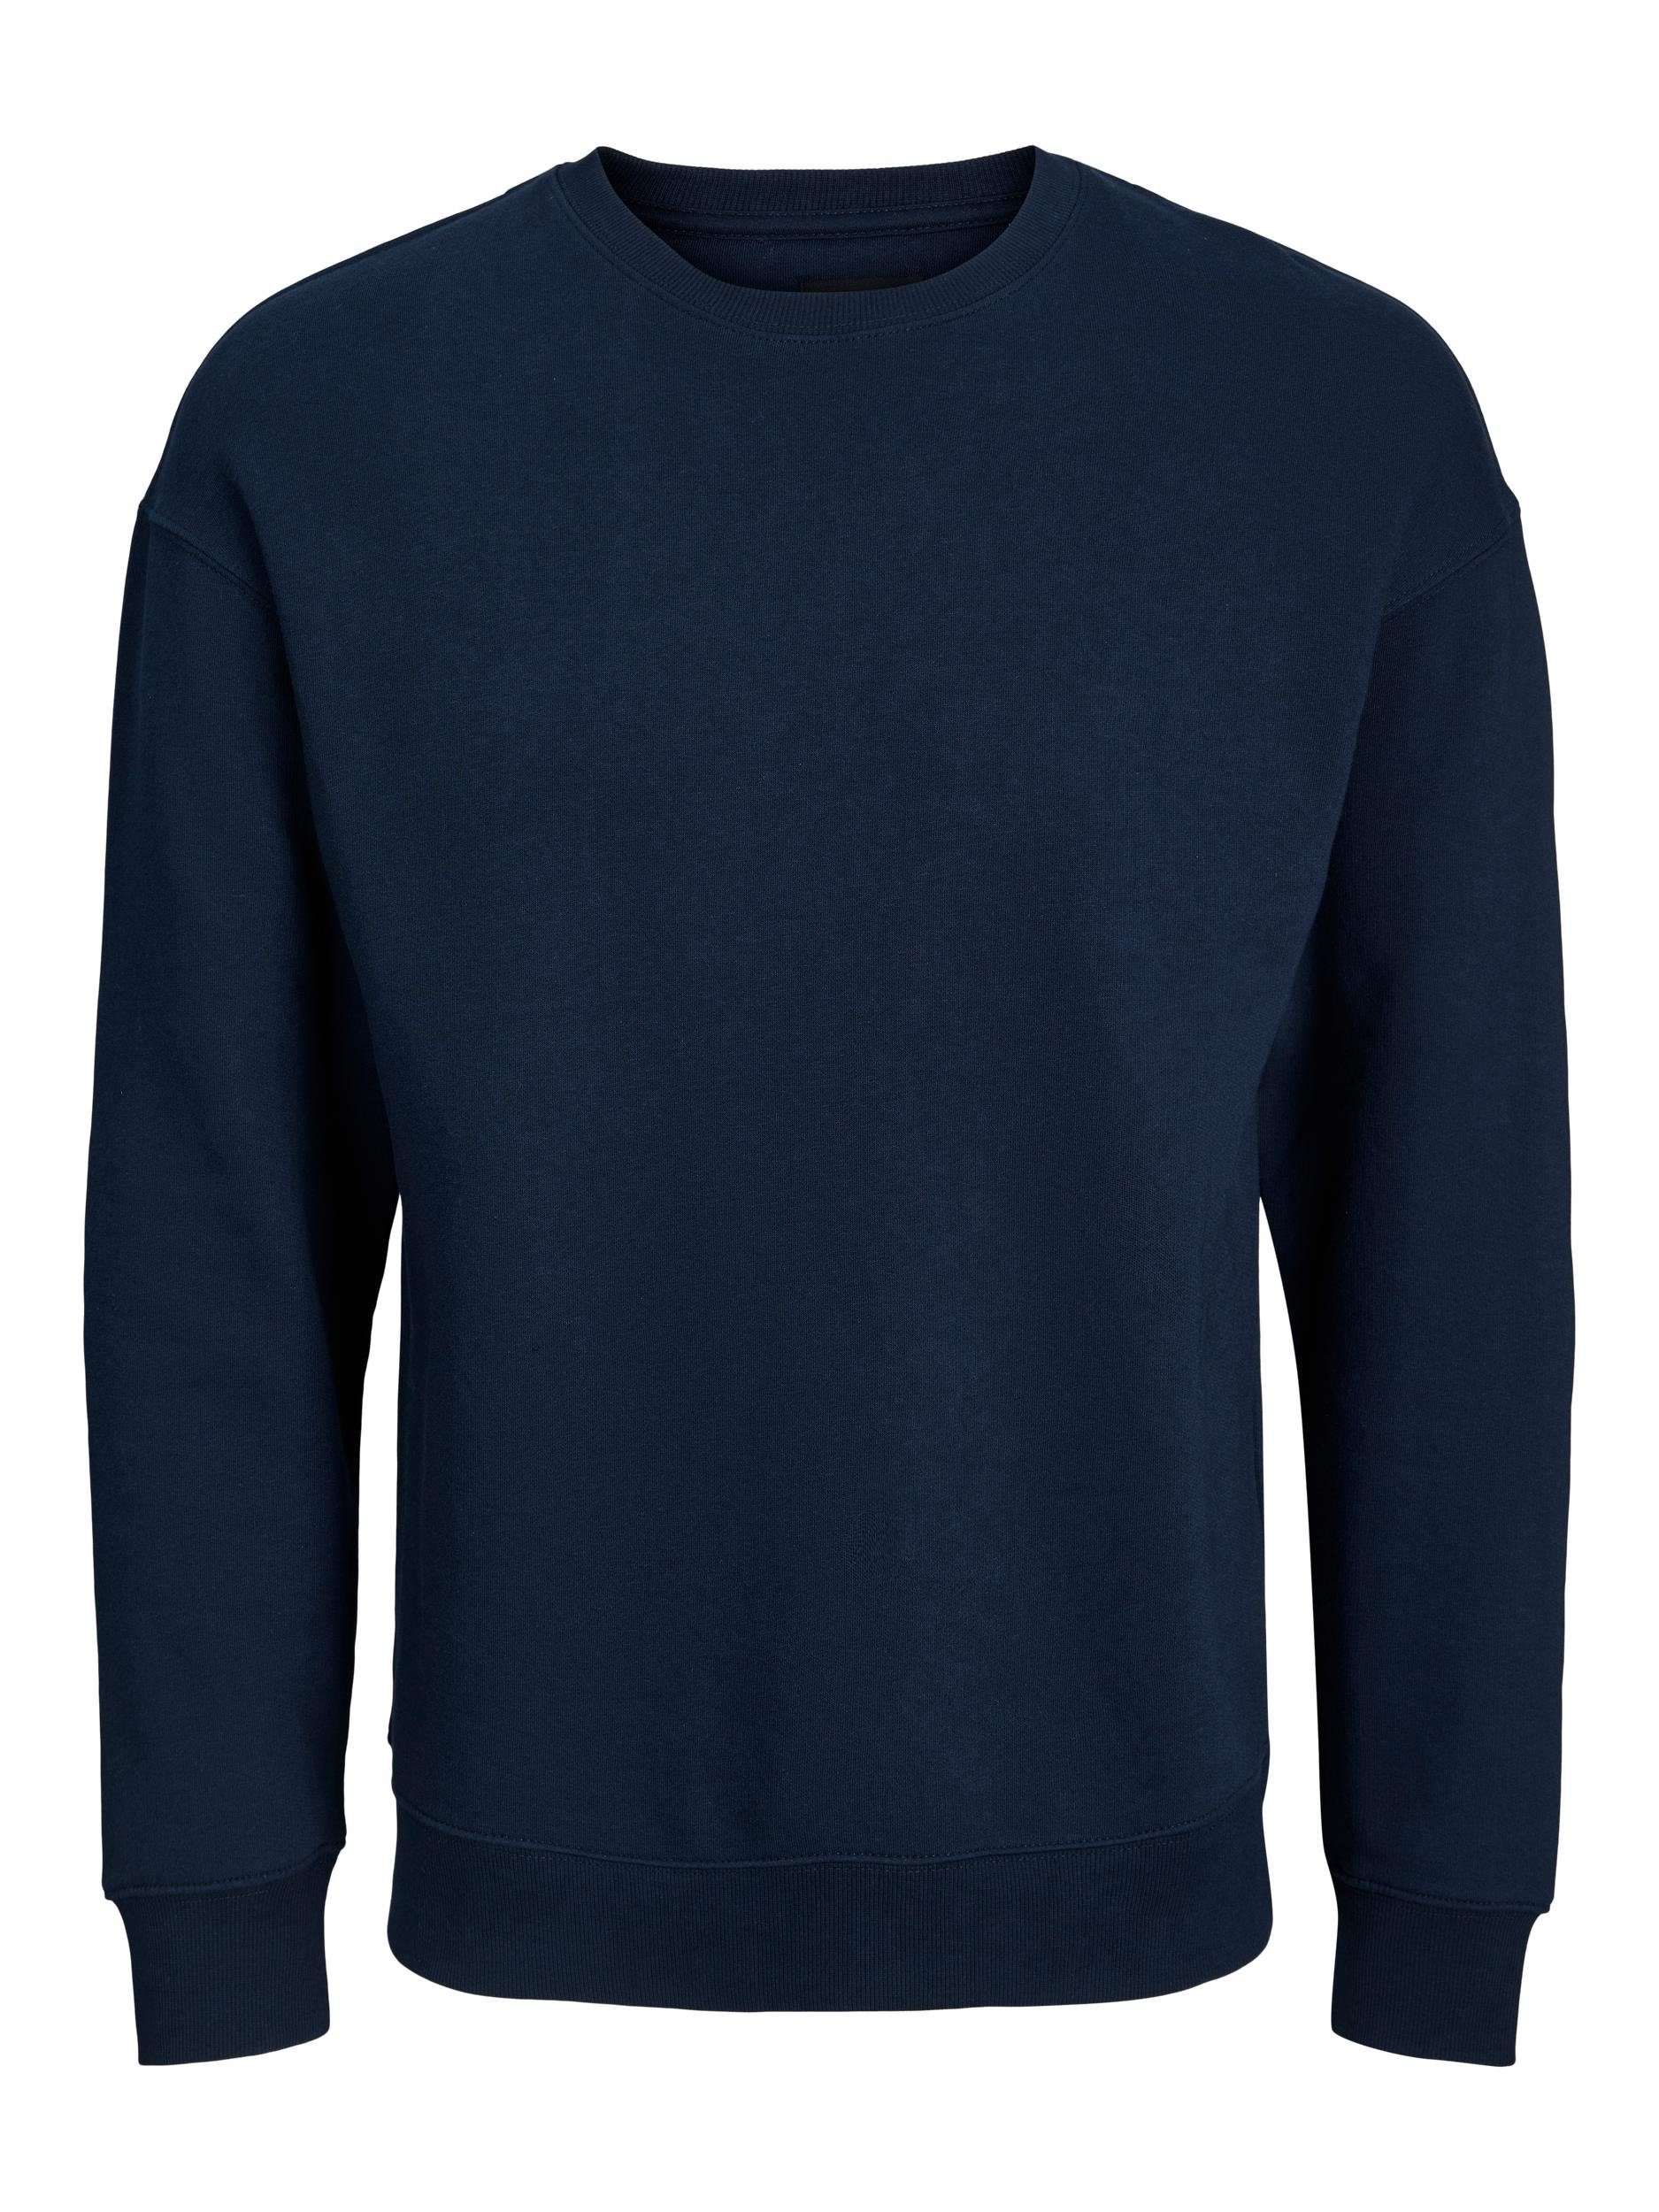 Jack & Jones PlusSize Sweatshirt Navy SWEAT CREW NOOS JJEBRADLEY PLS Blazer